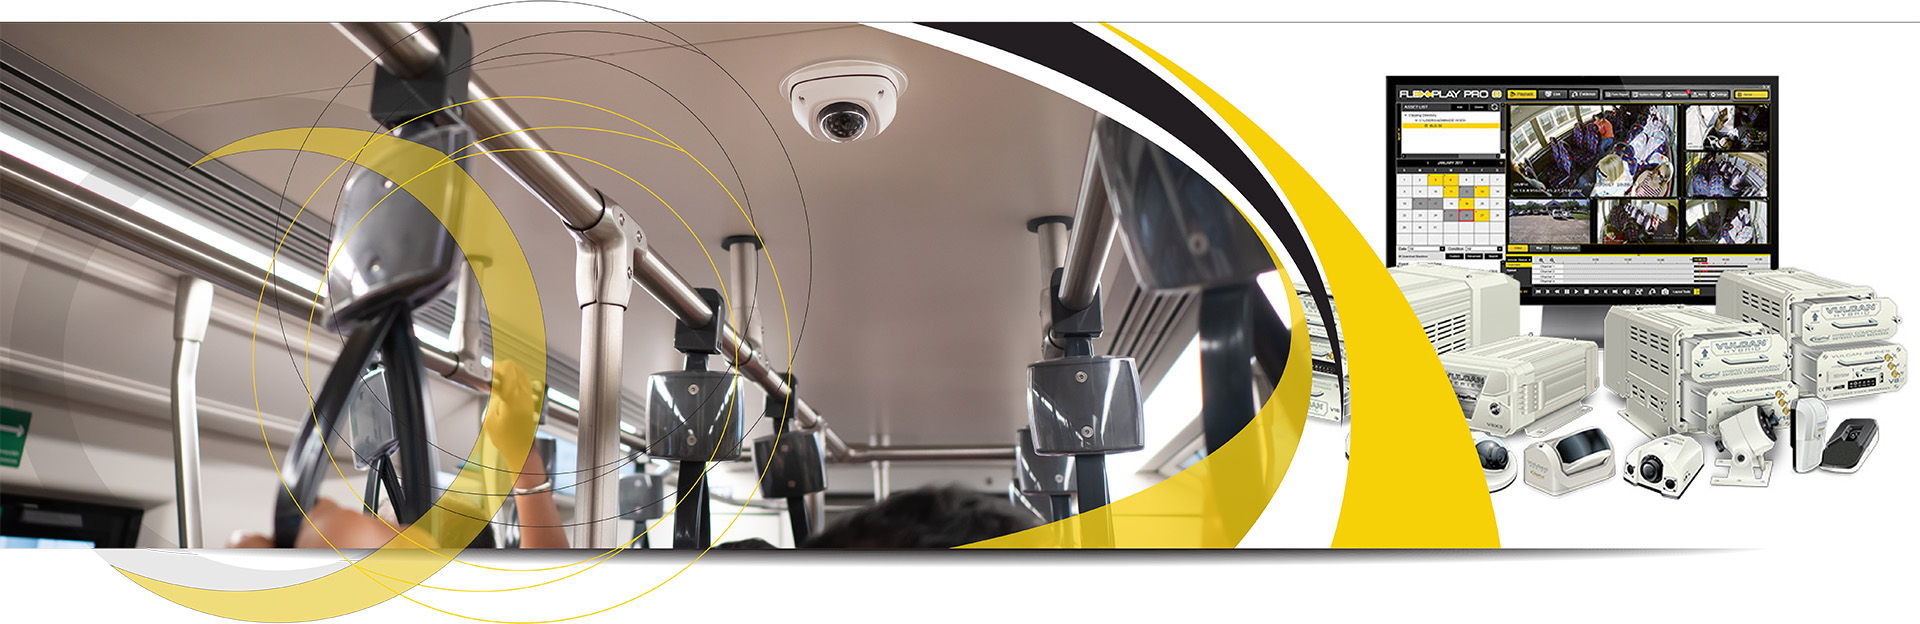 AngelTrax, Engineering, Mass Transit, Rail, buses, trains, Aldridge Electrical, in vehicle mobile surveillance